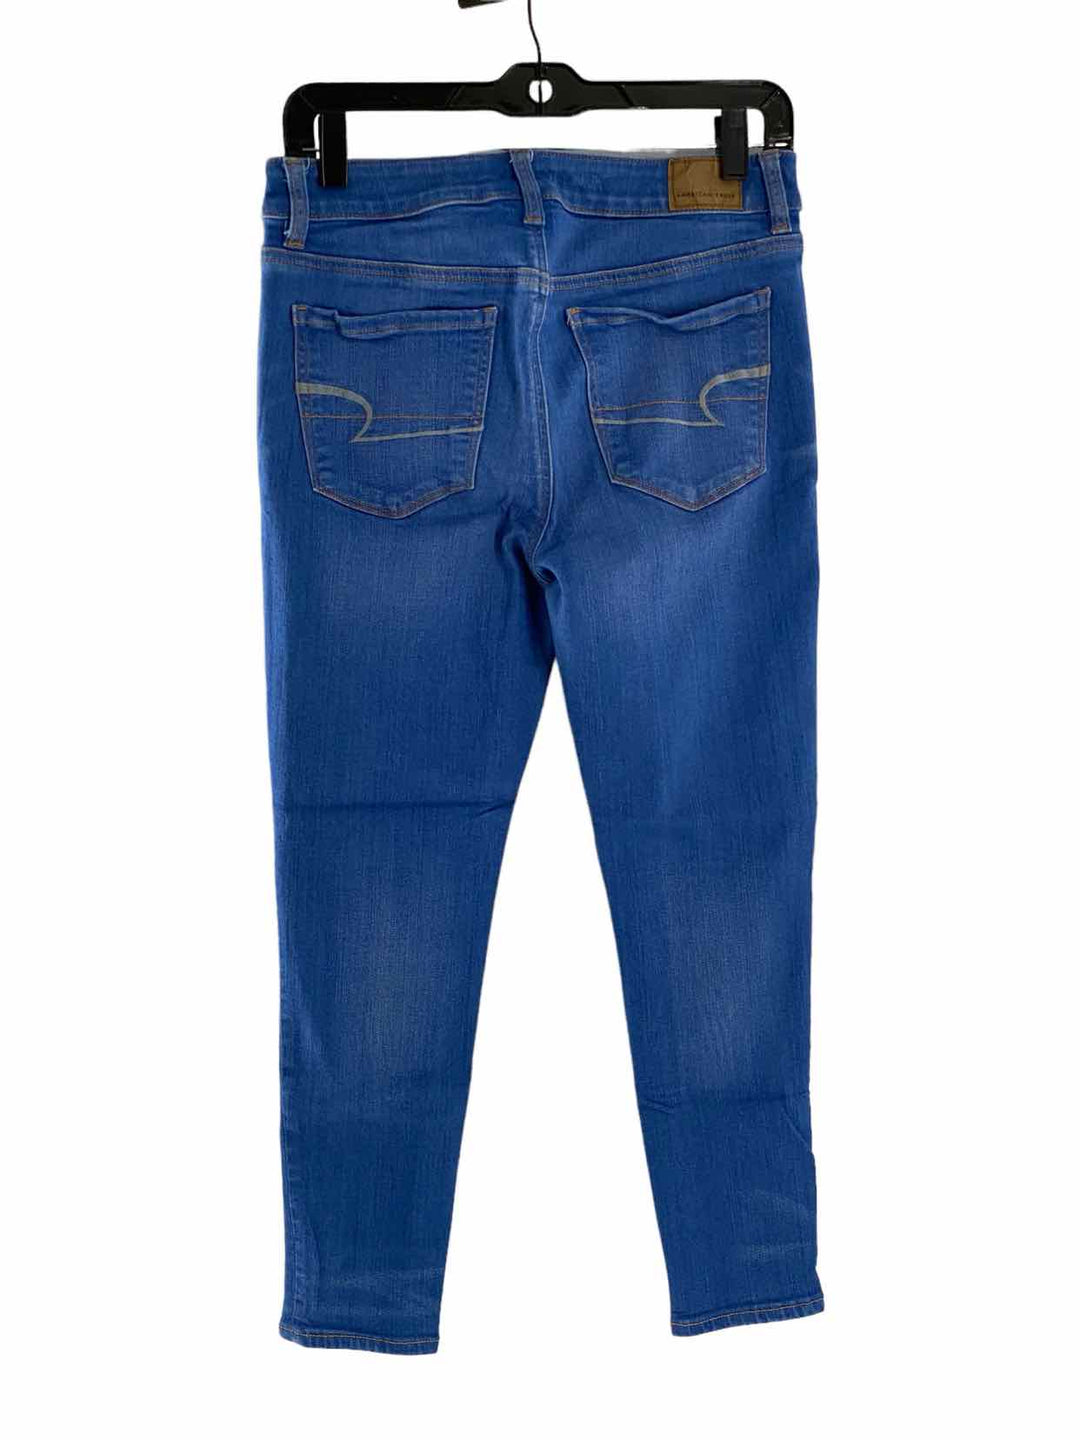 American Eagle Size 8 Neon Blue Pants